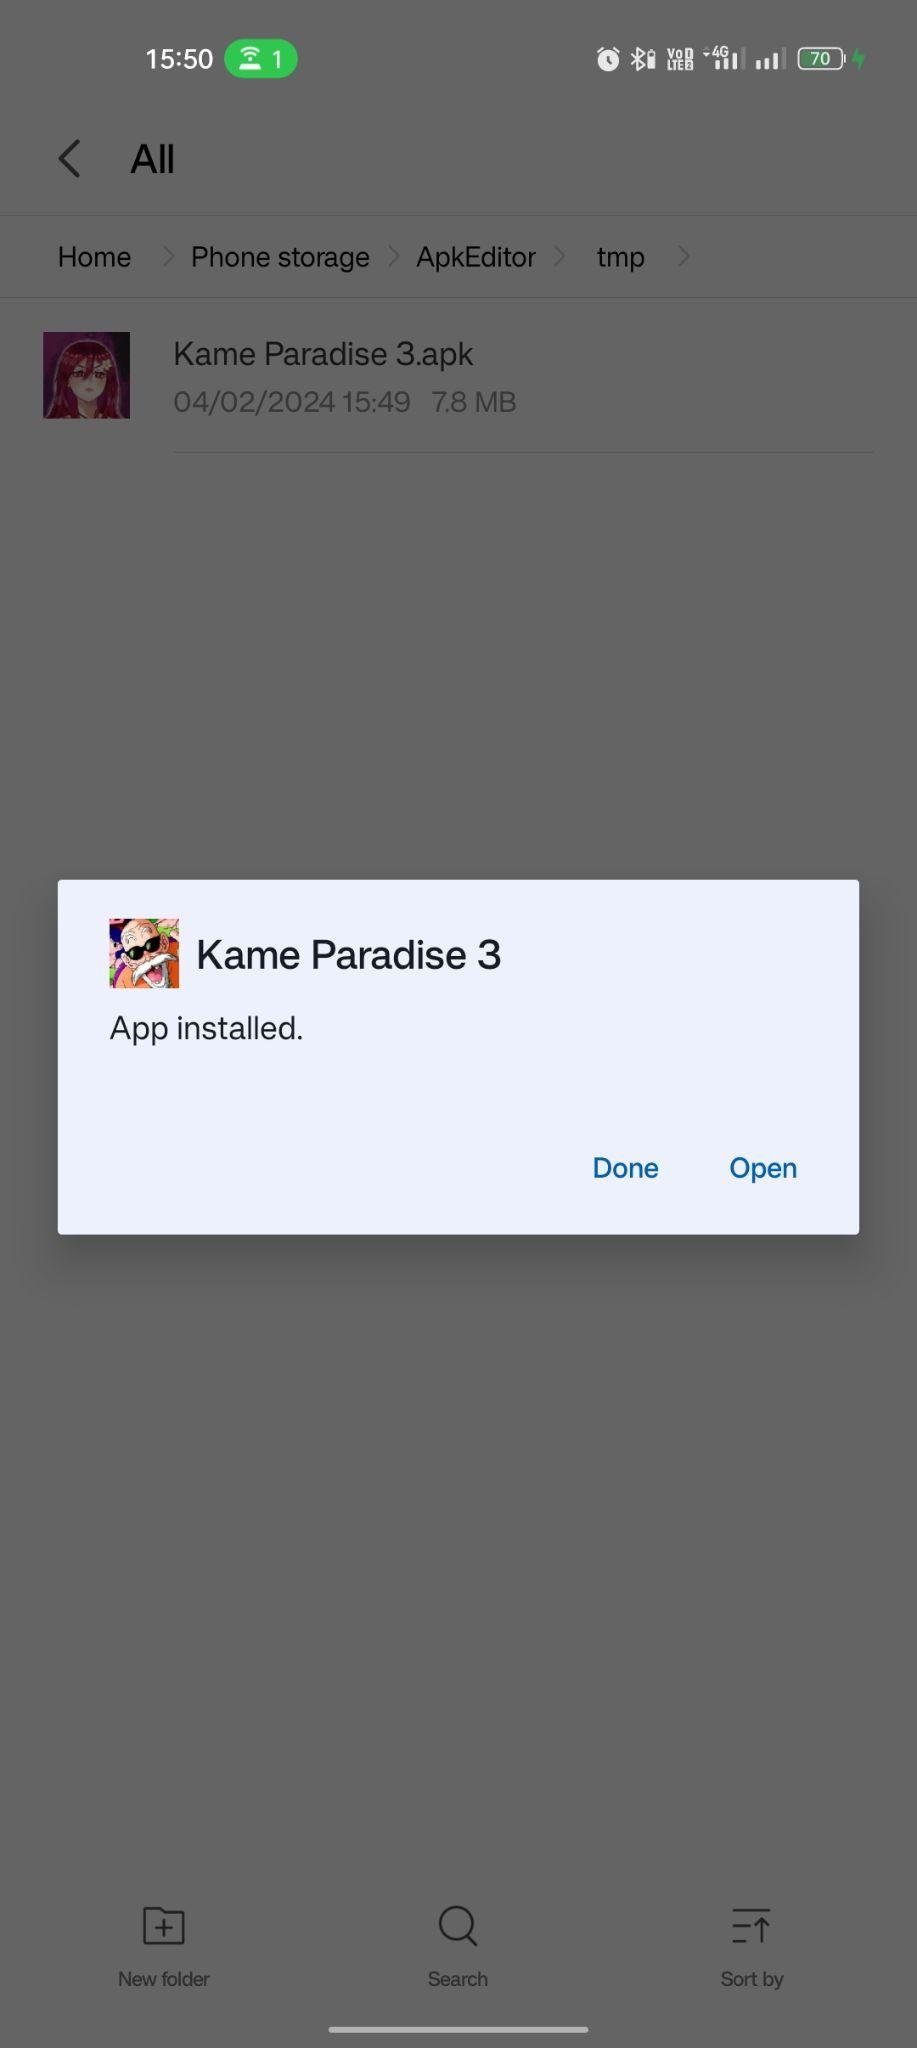 Kame Paradise 3 apk installed